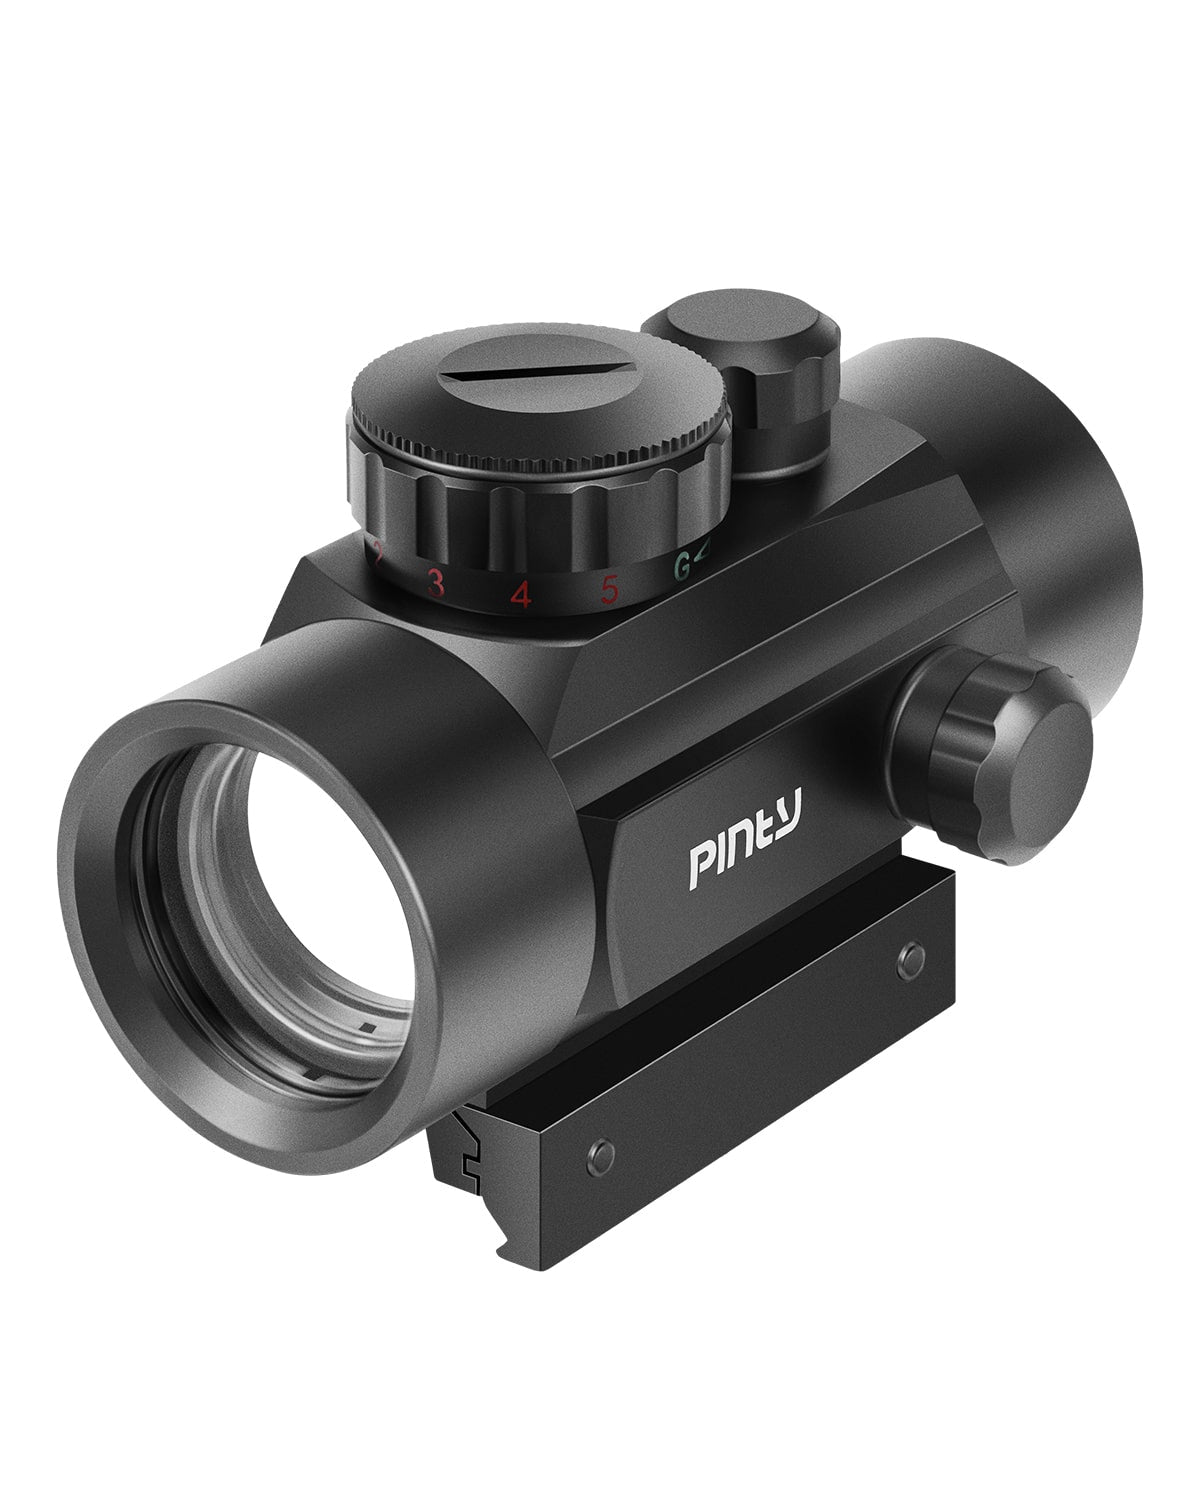 1x40mm Reflex Red Green Dot Sight Riflescope with Free 11mm & 20mm Mount Rails